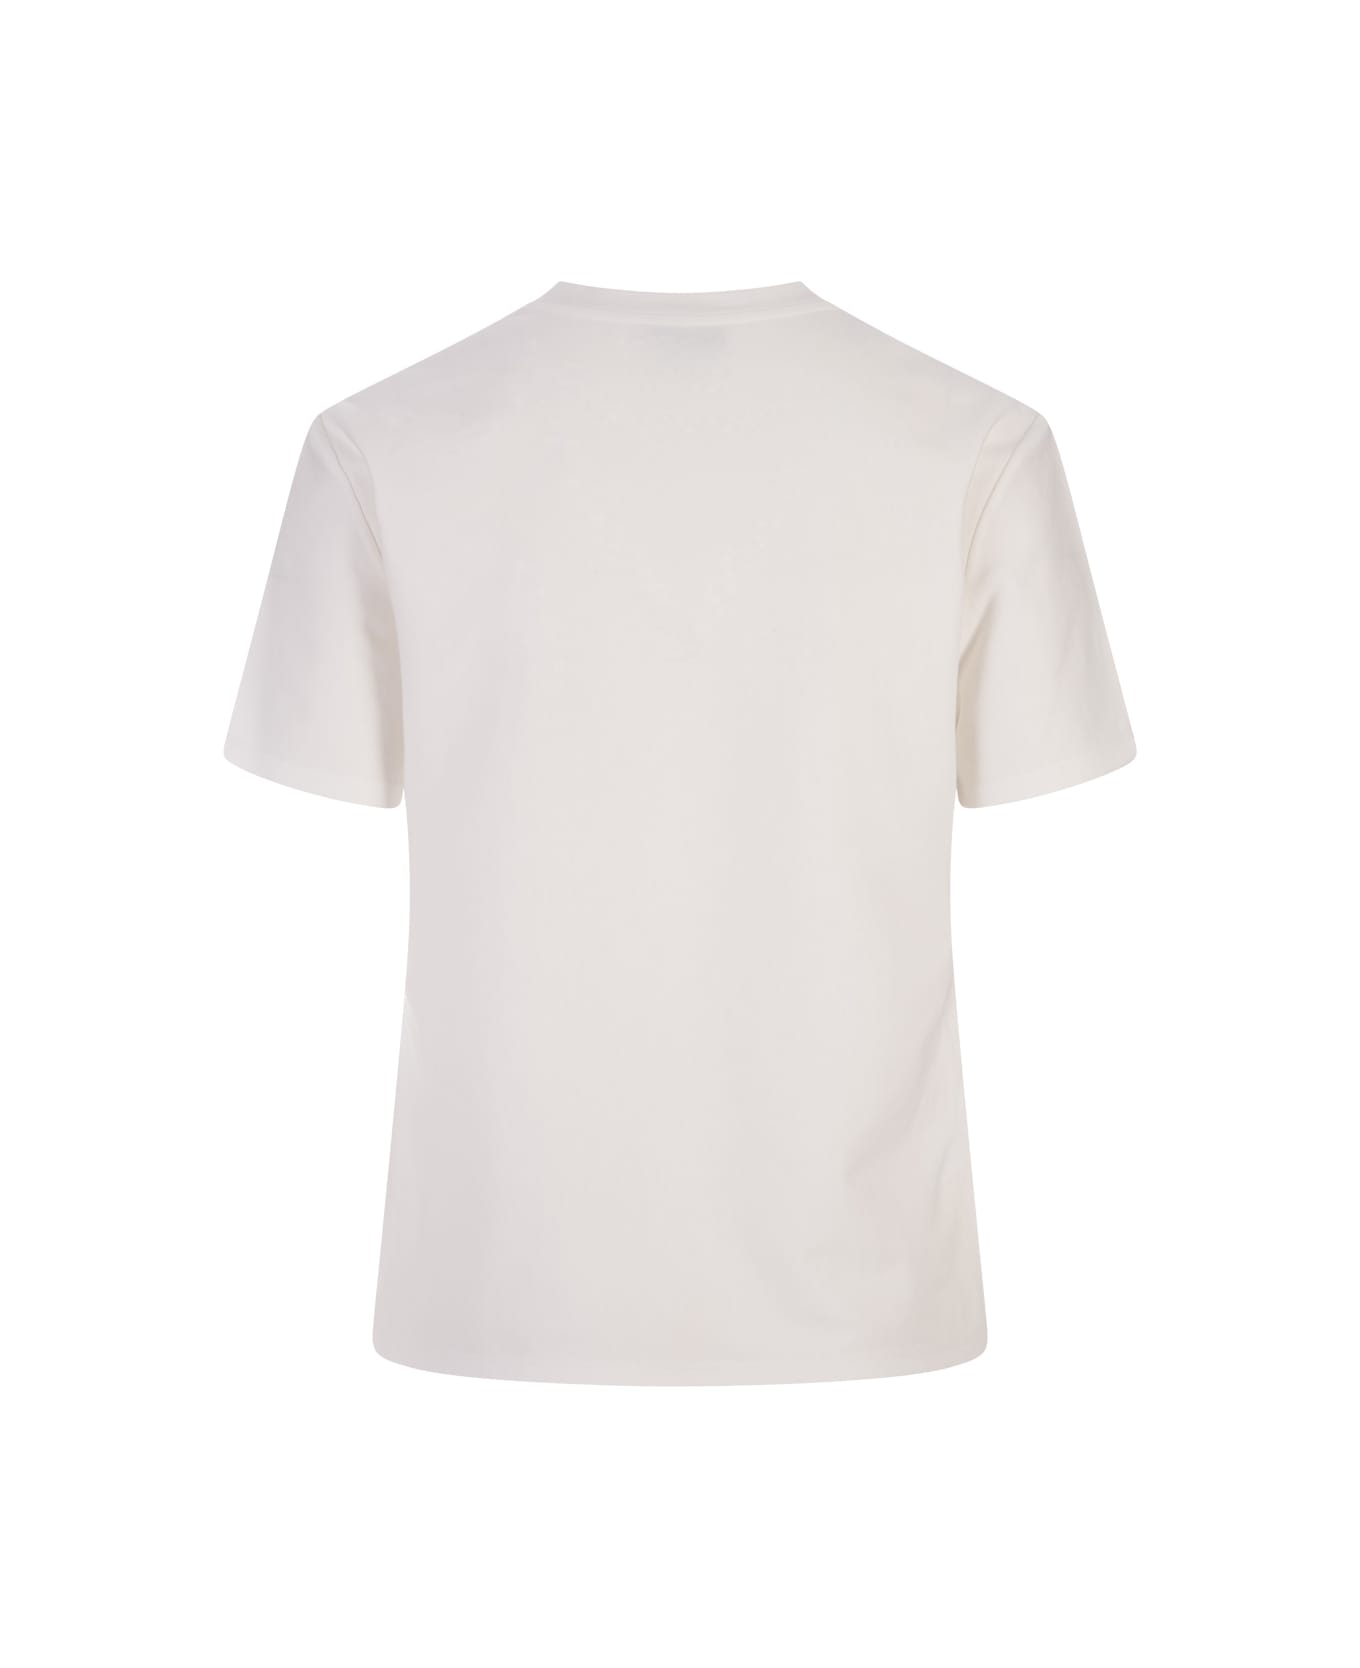 Giambattista Valli Embroidered Ivory T-shirt - White